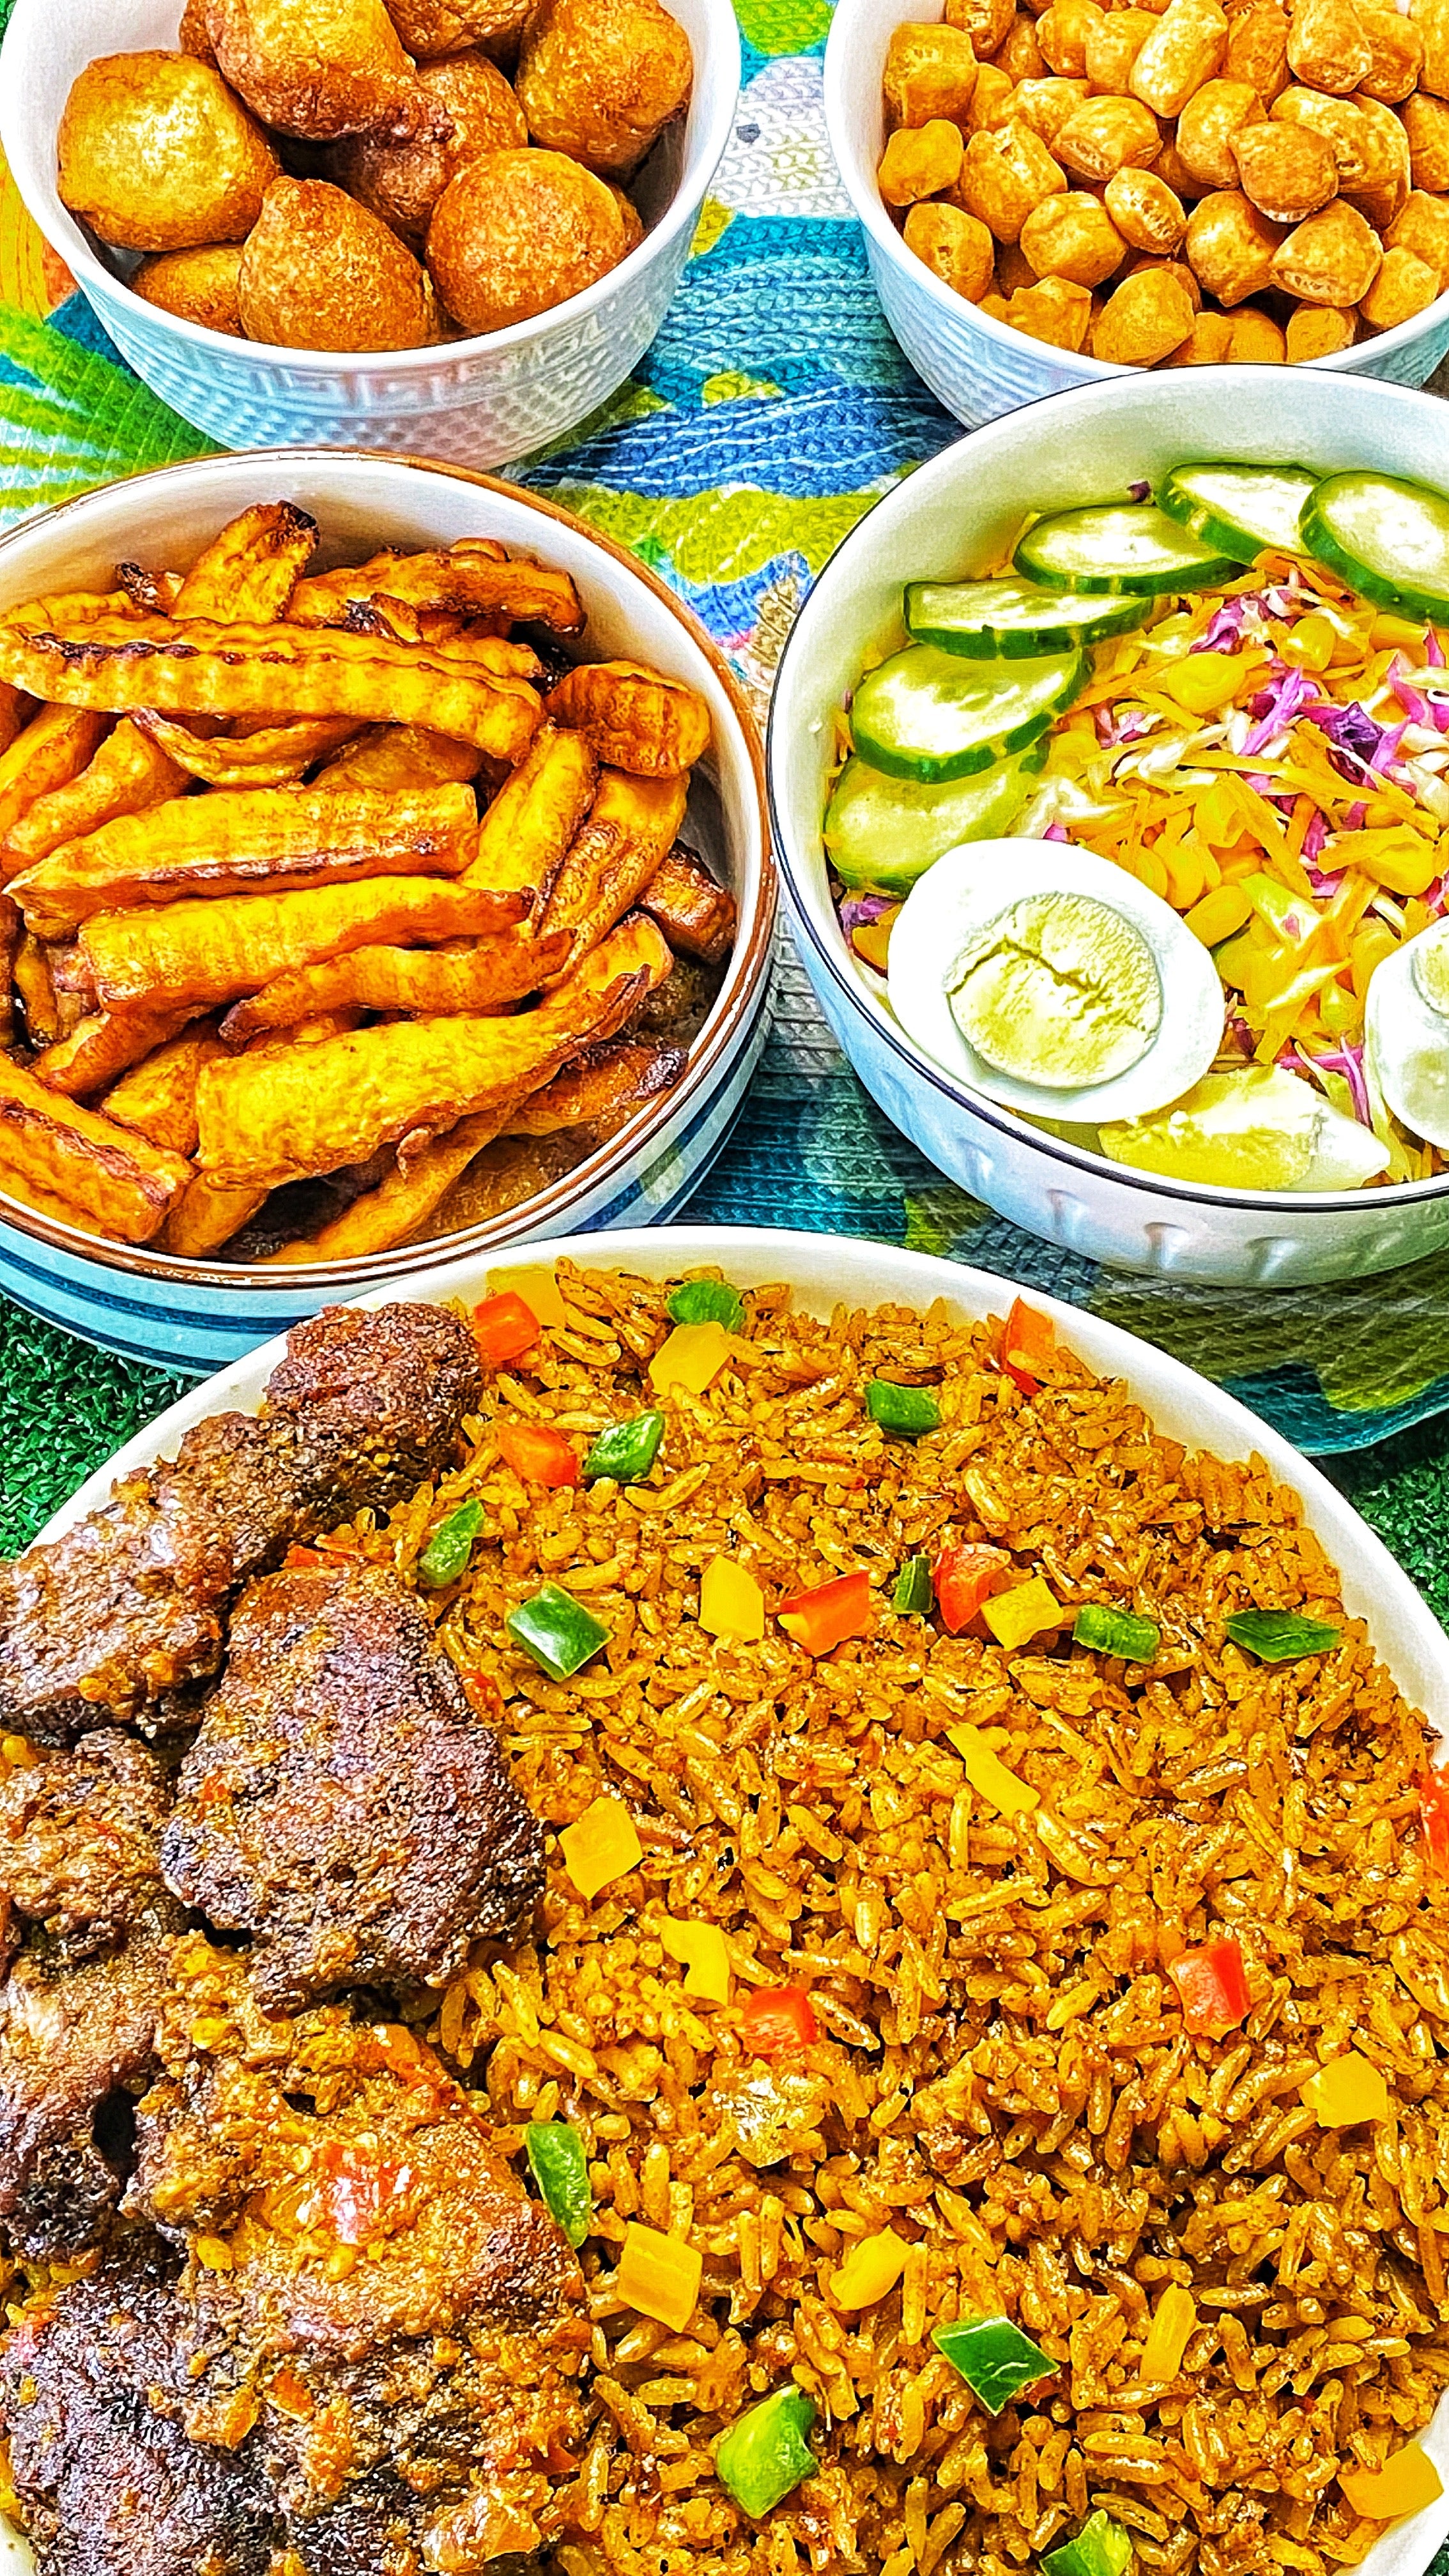 NIGERIAN SASITA JOLLOF - BUY 1, GET 1 FREE / GURA KIMWE, UBONE IKINDI KUBUNTU - The Best Nigerian Food in Kigali